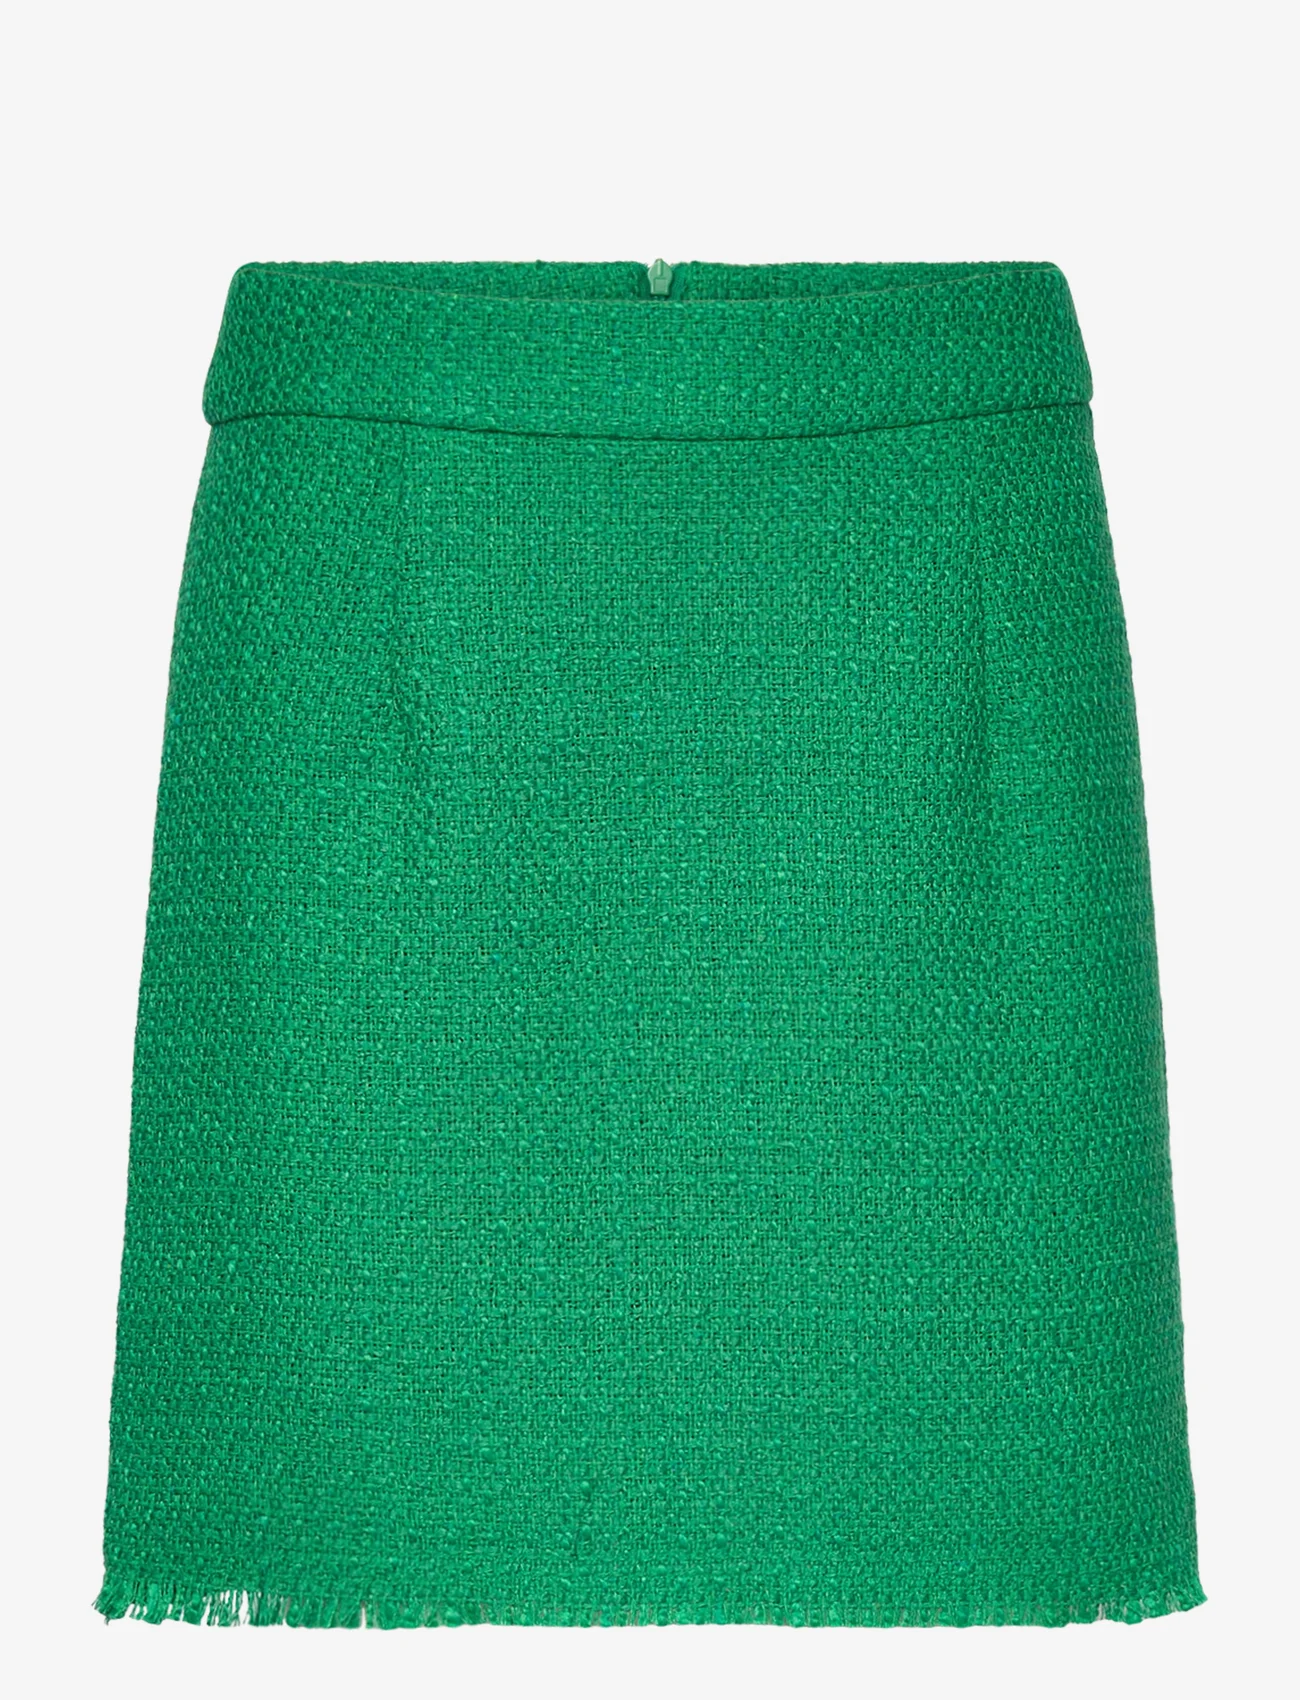 Saint Tropez - BirdieSZ Skirt - short skirts - verdant green - 0